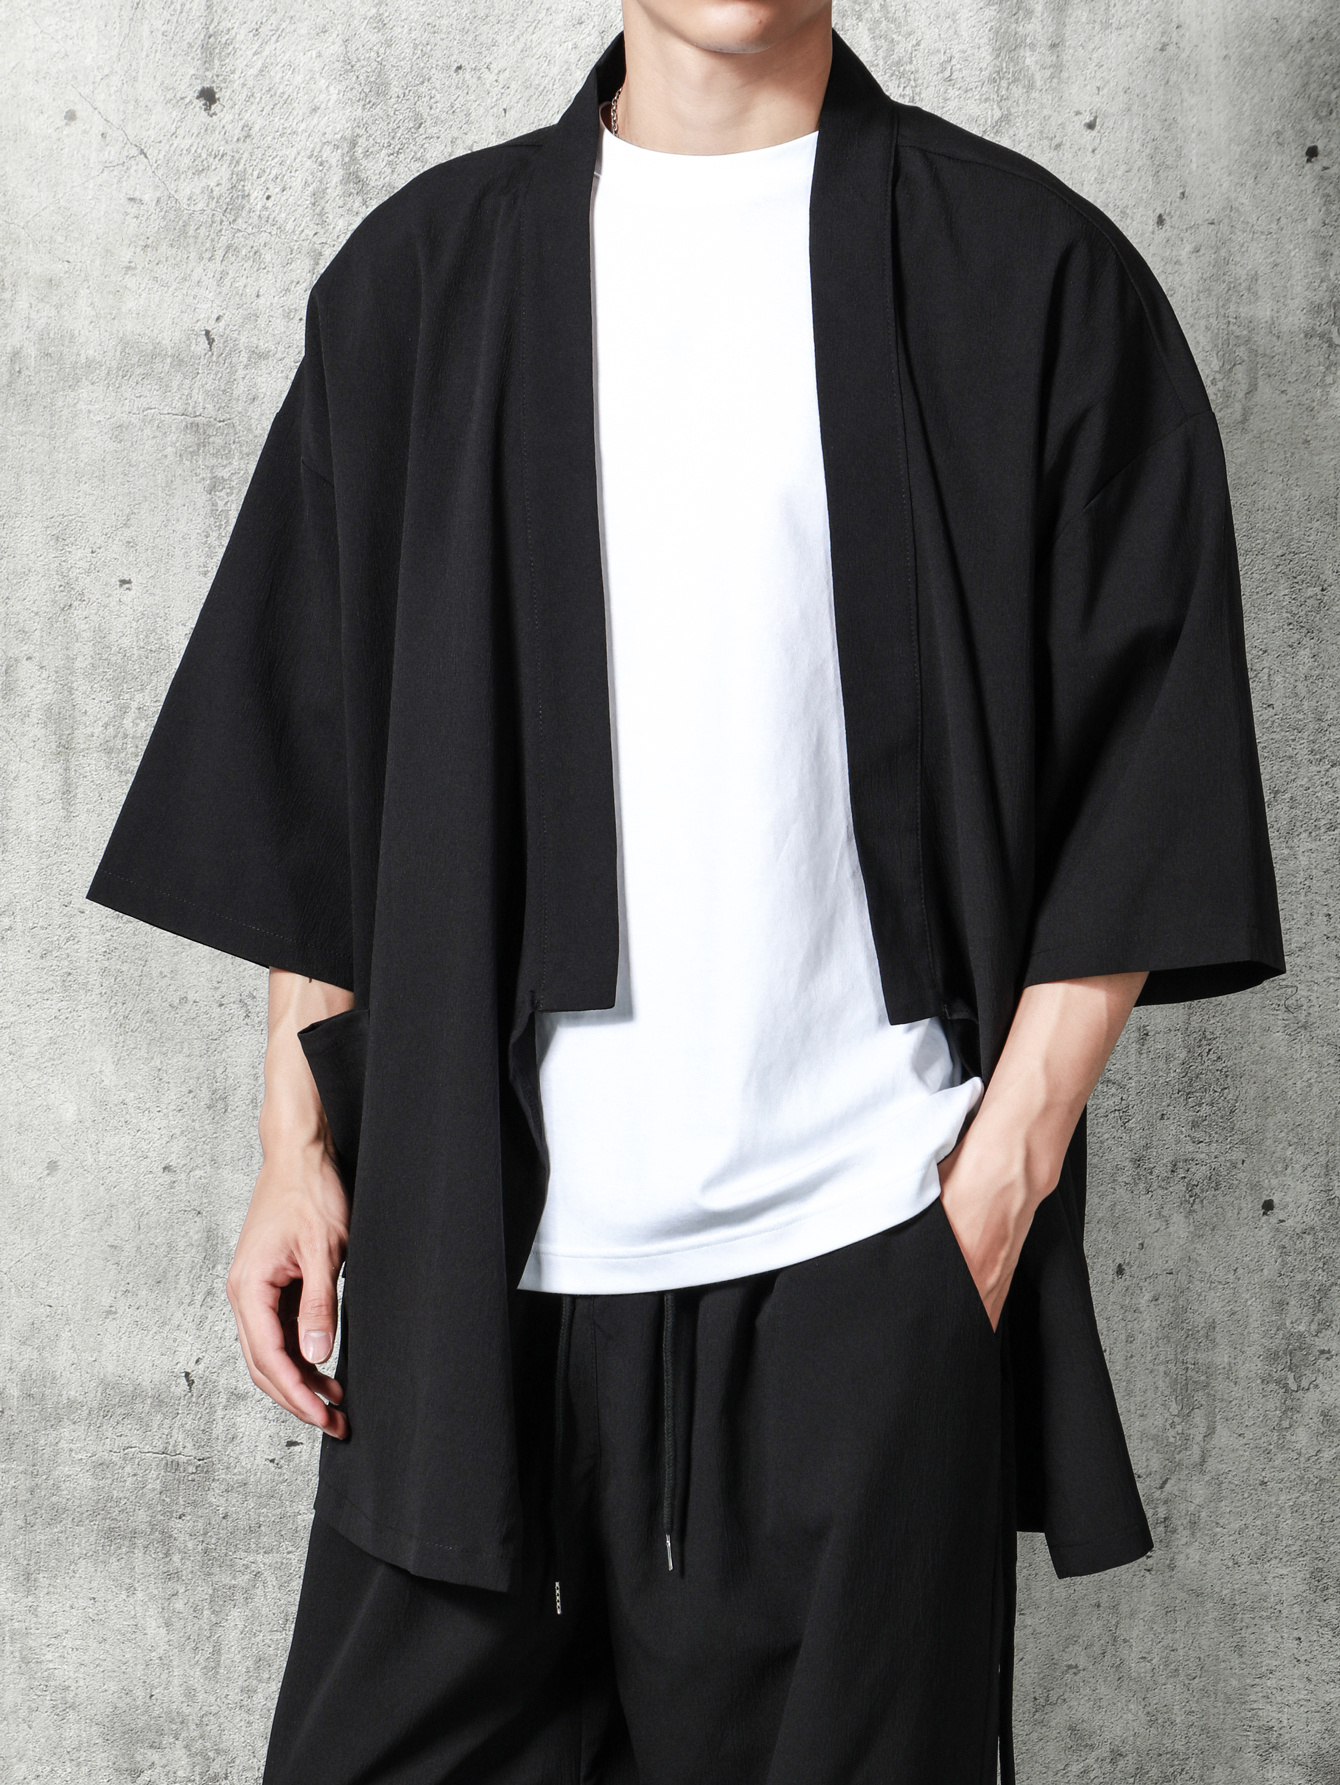 Japanese Clothing Men's Short Kimono Jacket, Black, XL